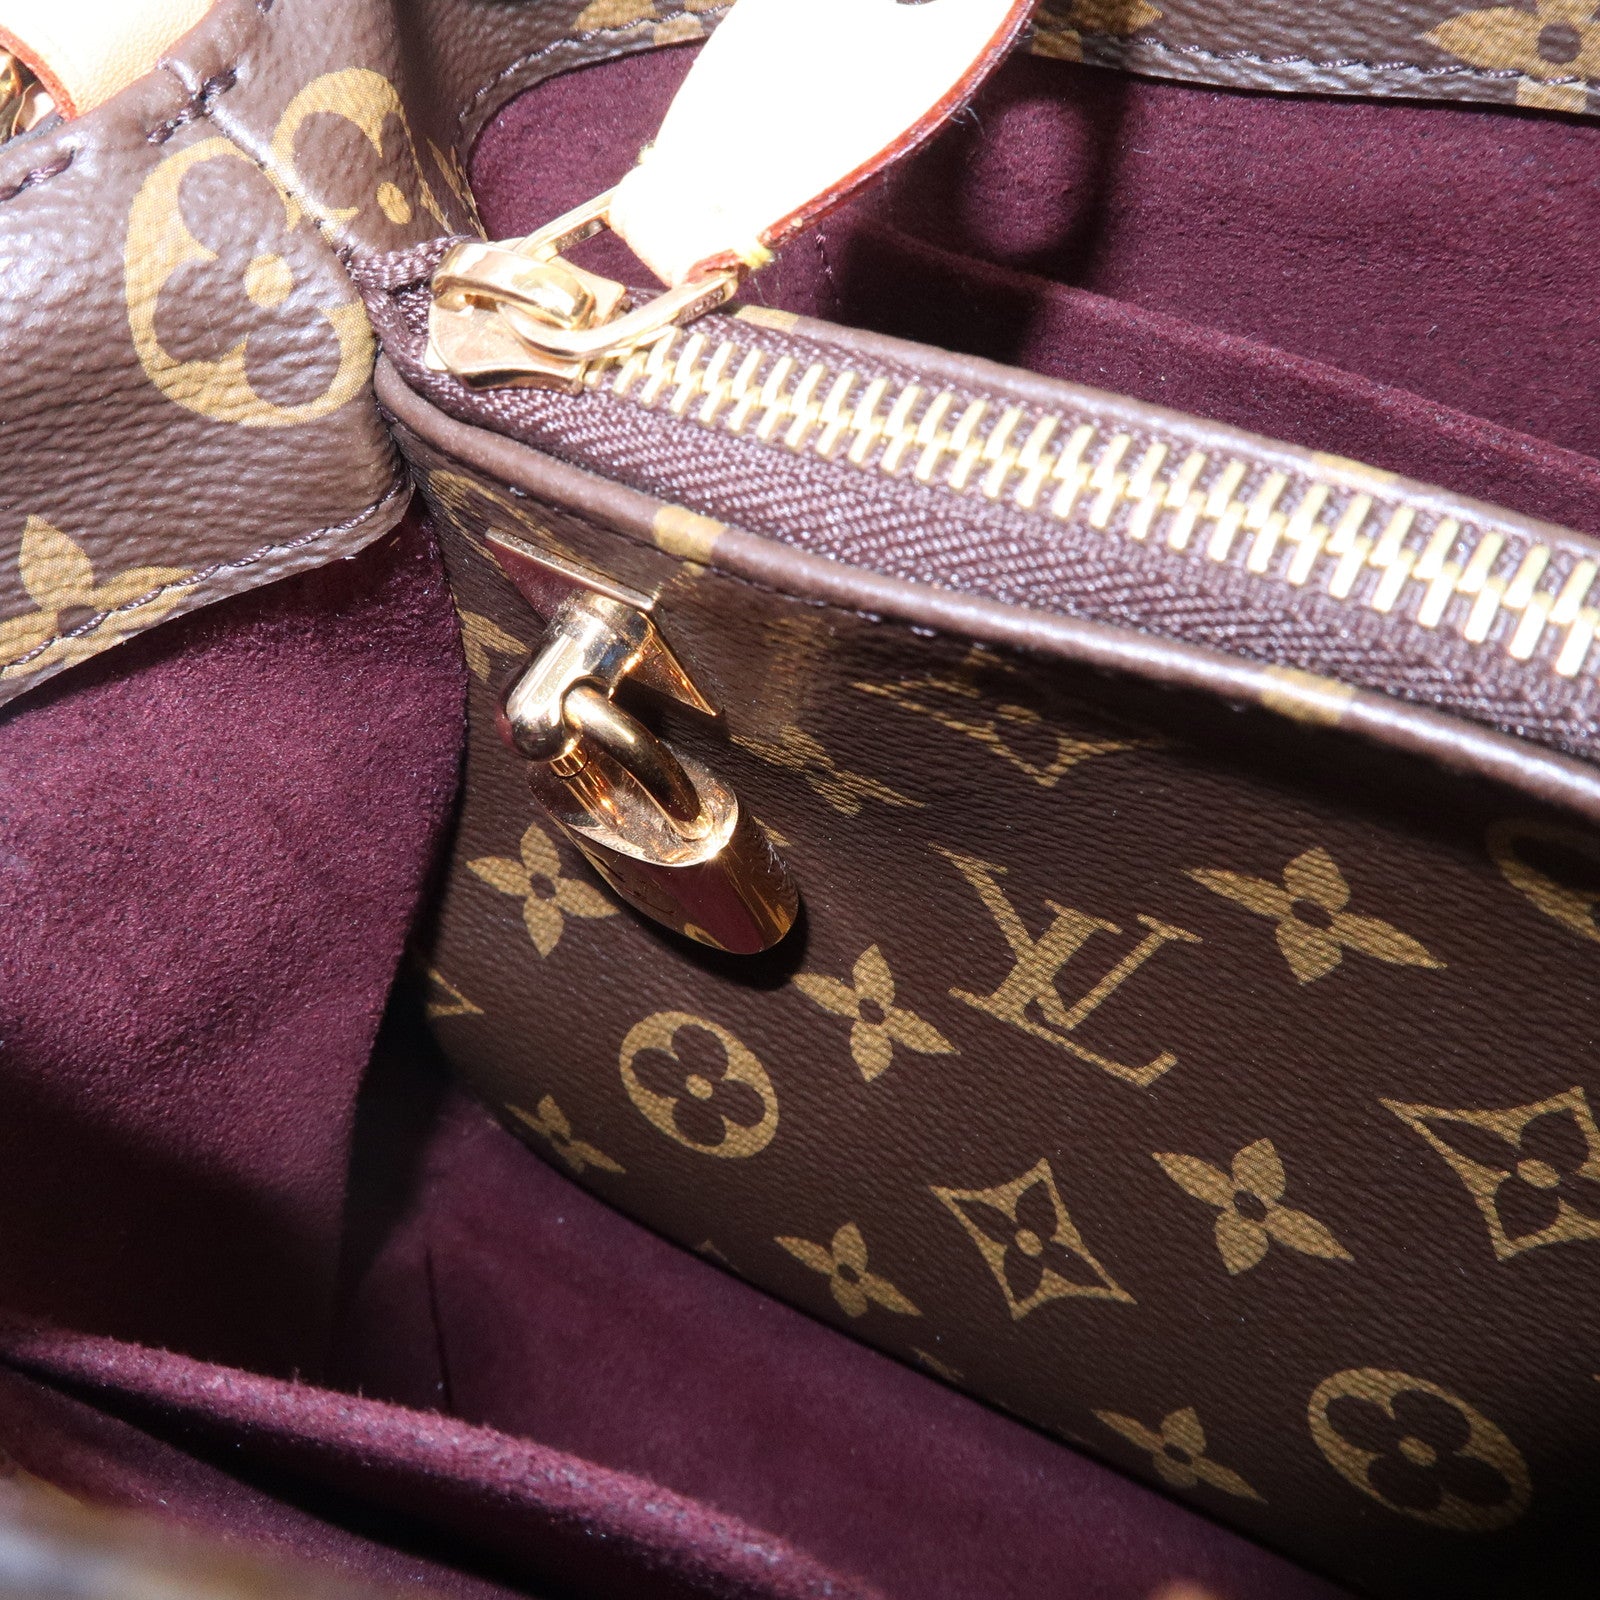  Louis Vuitton M41055 Bag Handbag Shoulder Bag 2-Way